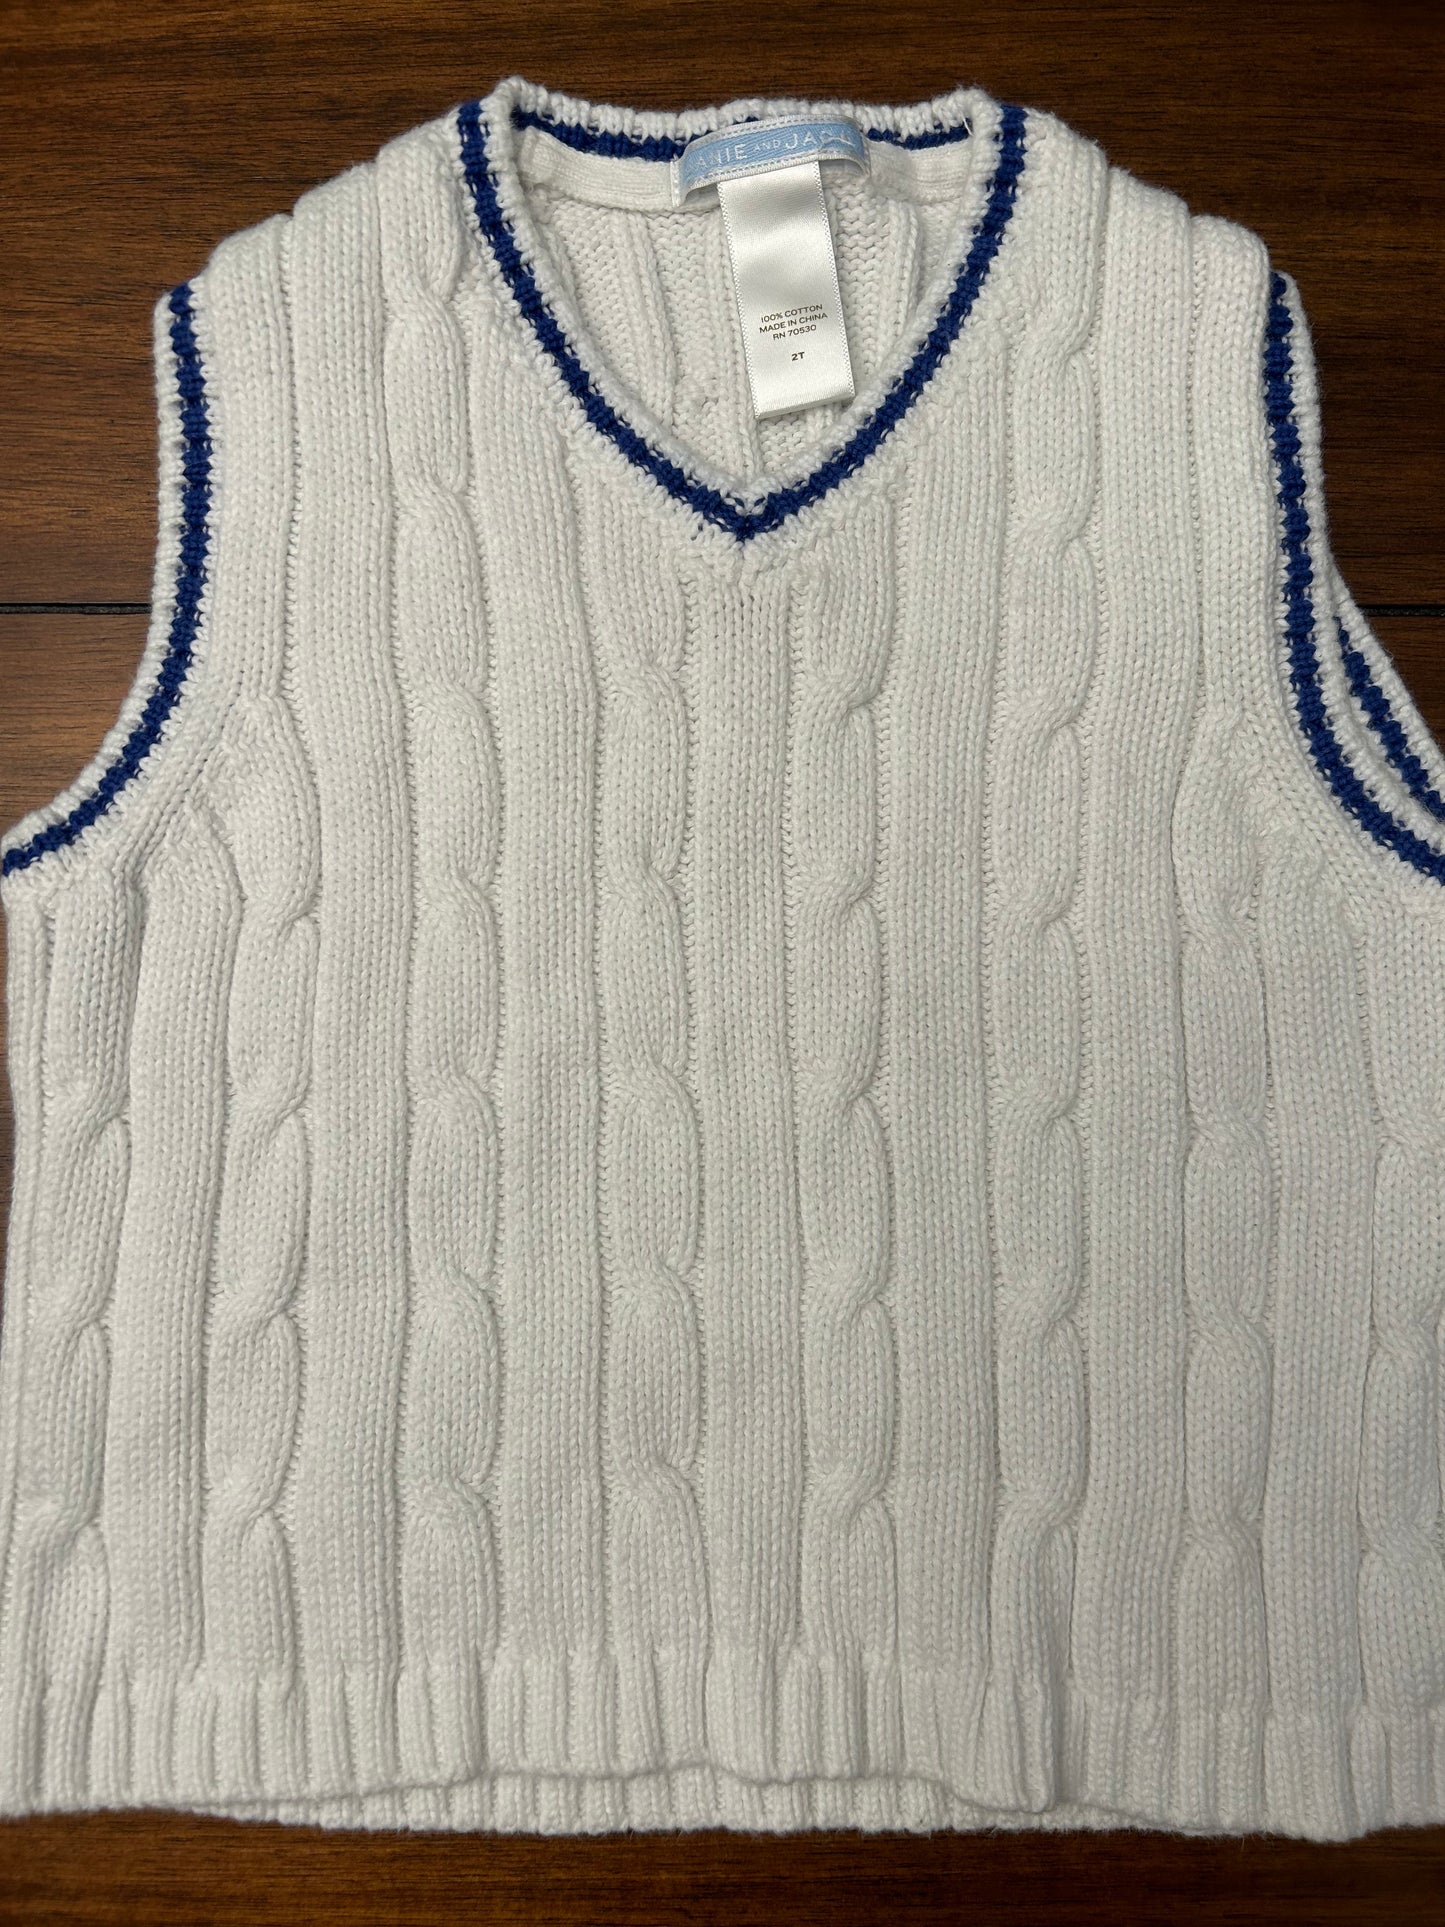 Janie & Jack Boys White Sweater Vest Size 2T PPU 45040